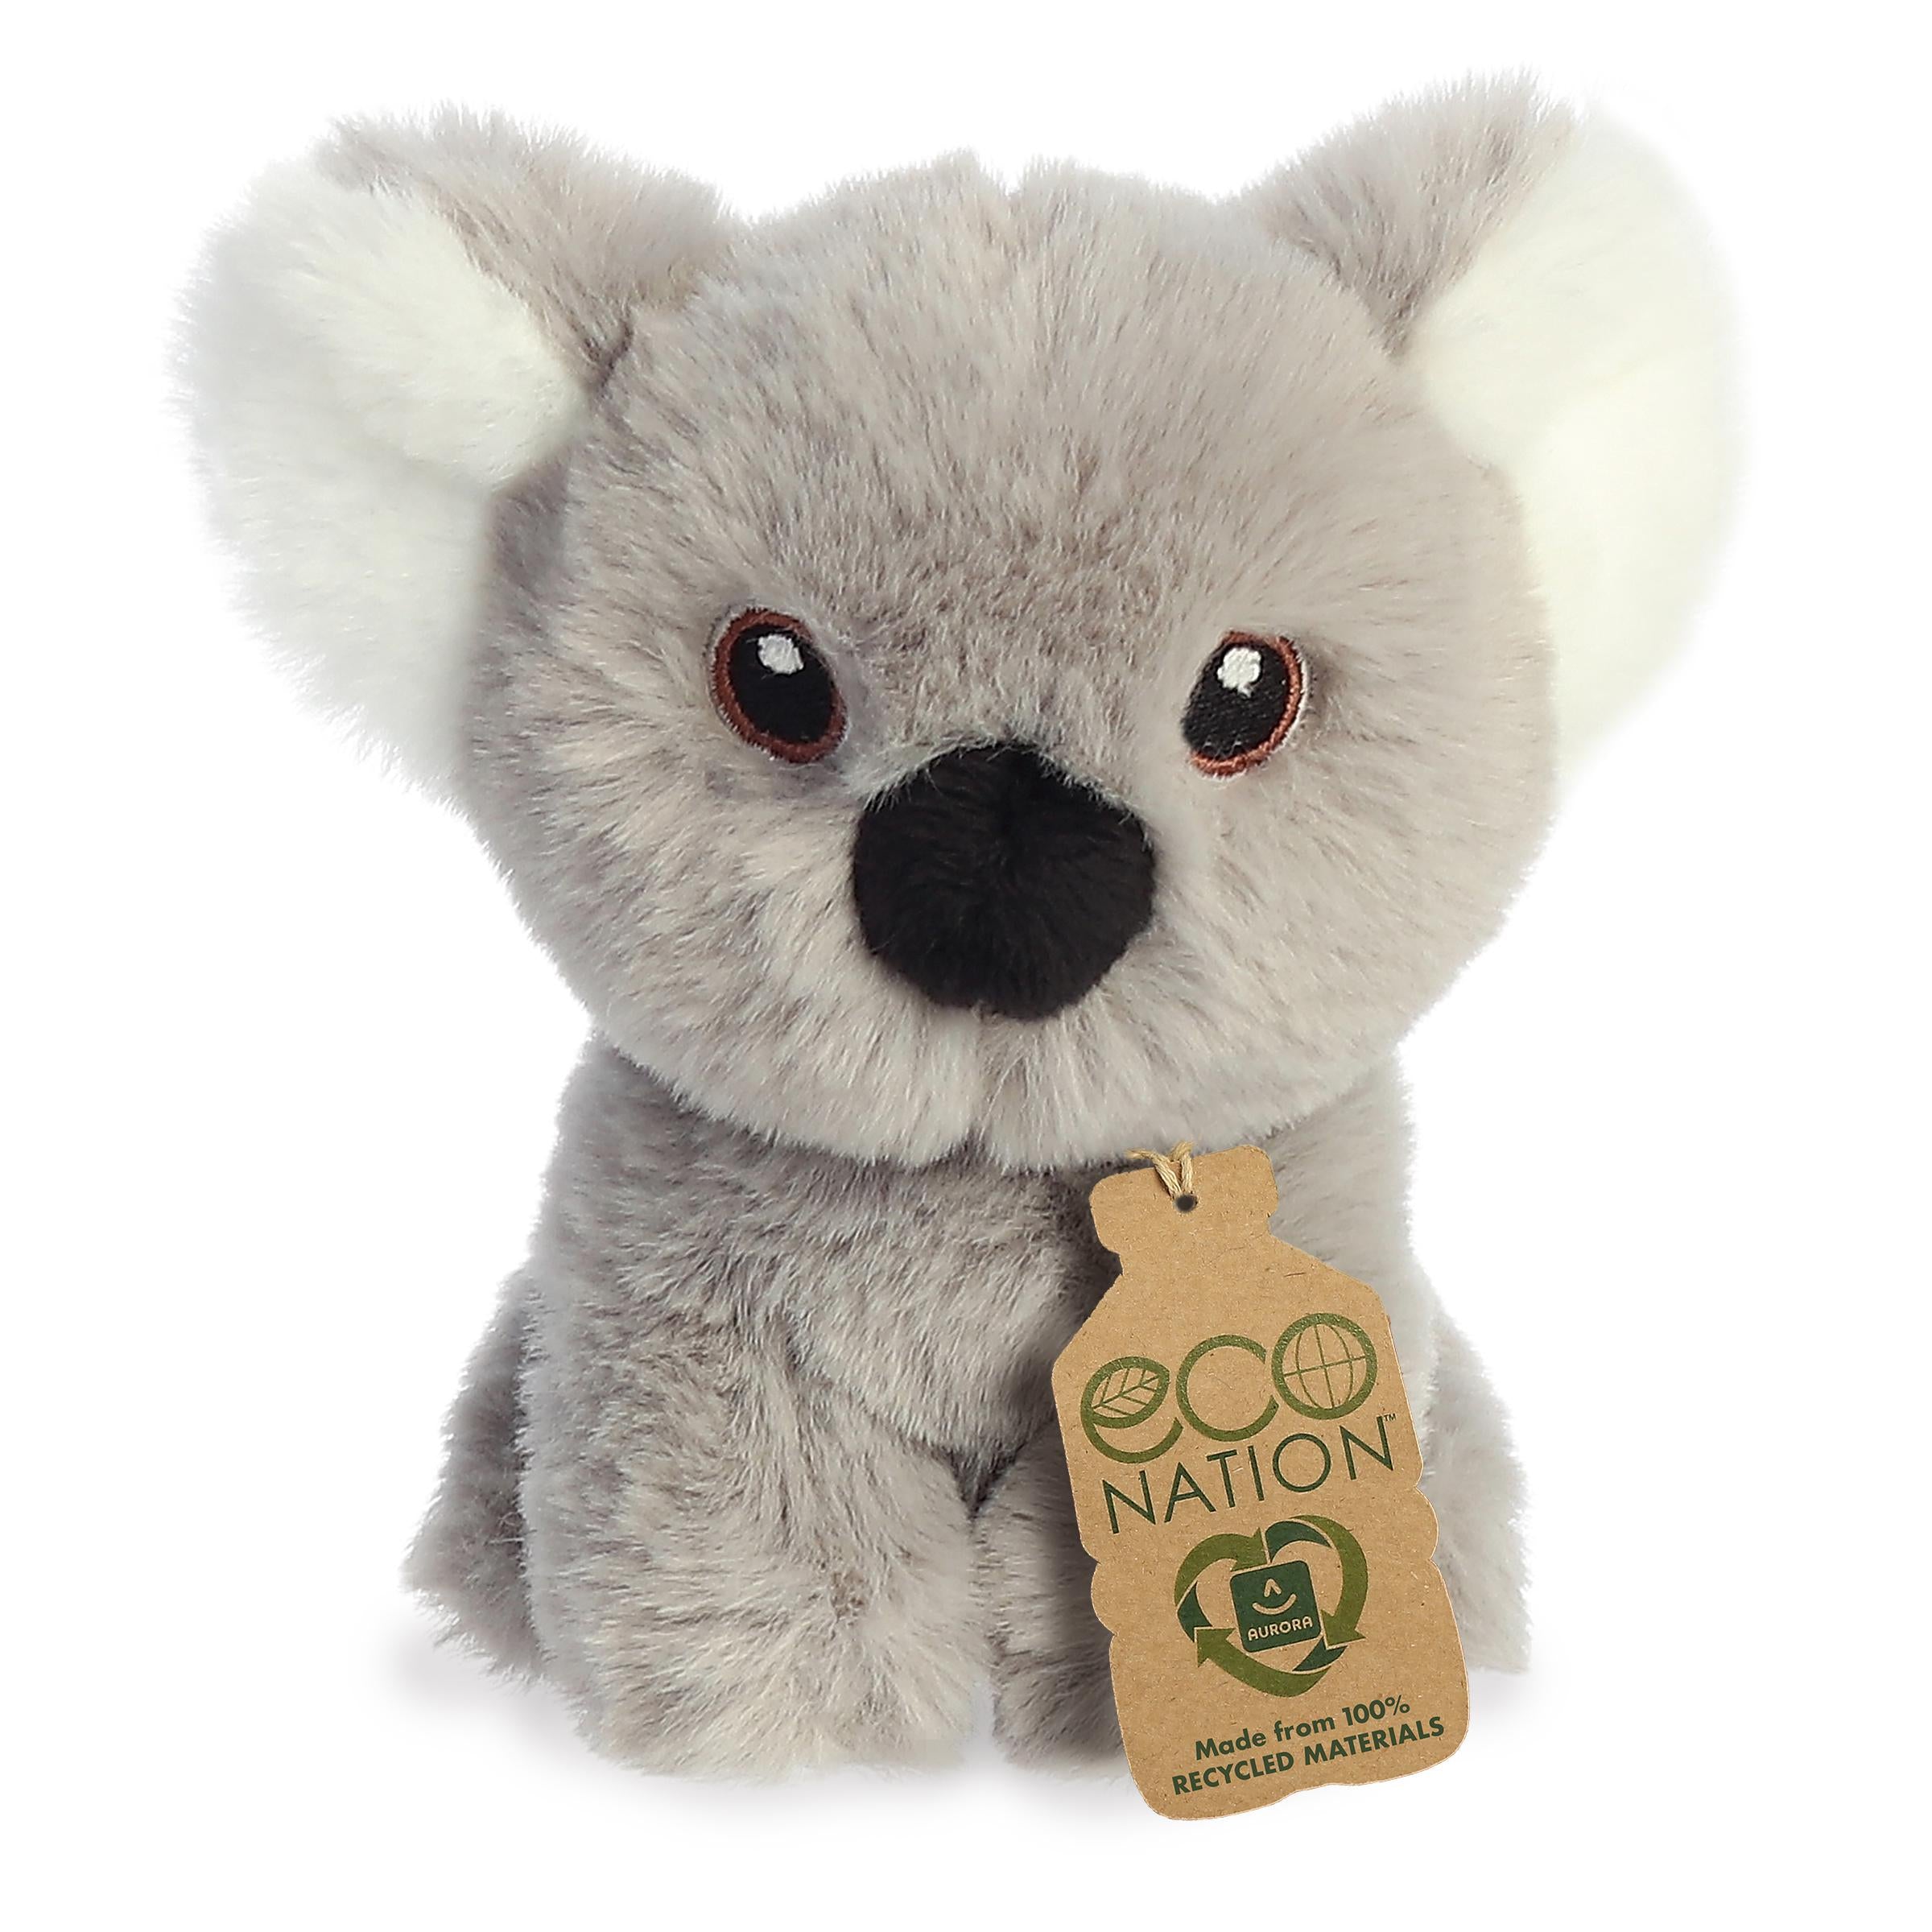 Mini Koala Ã¢â‚¬â€œ Adorable Eco-Nation Stuffed Animals Ã¢â‚¬â€œ